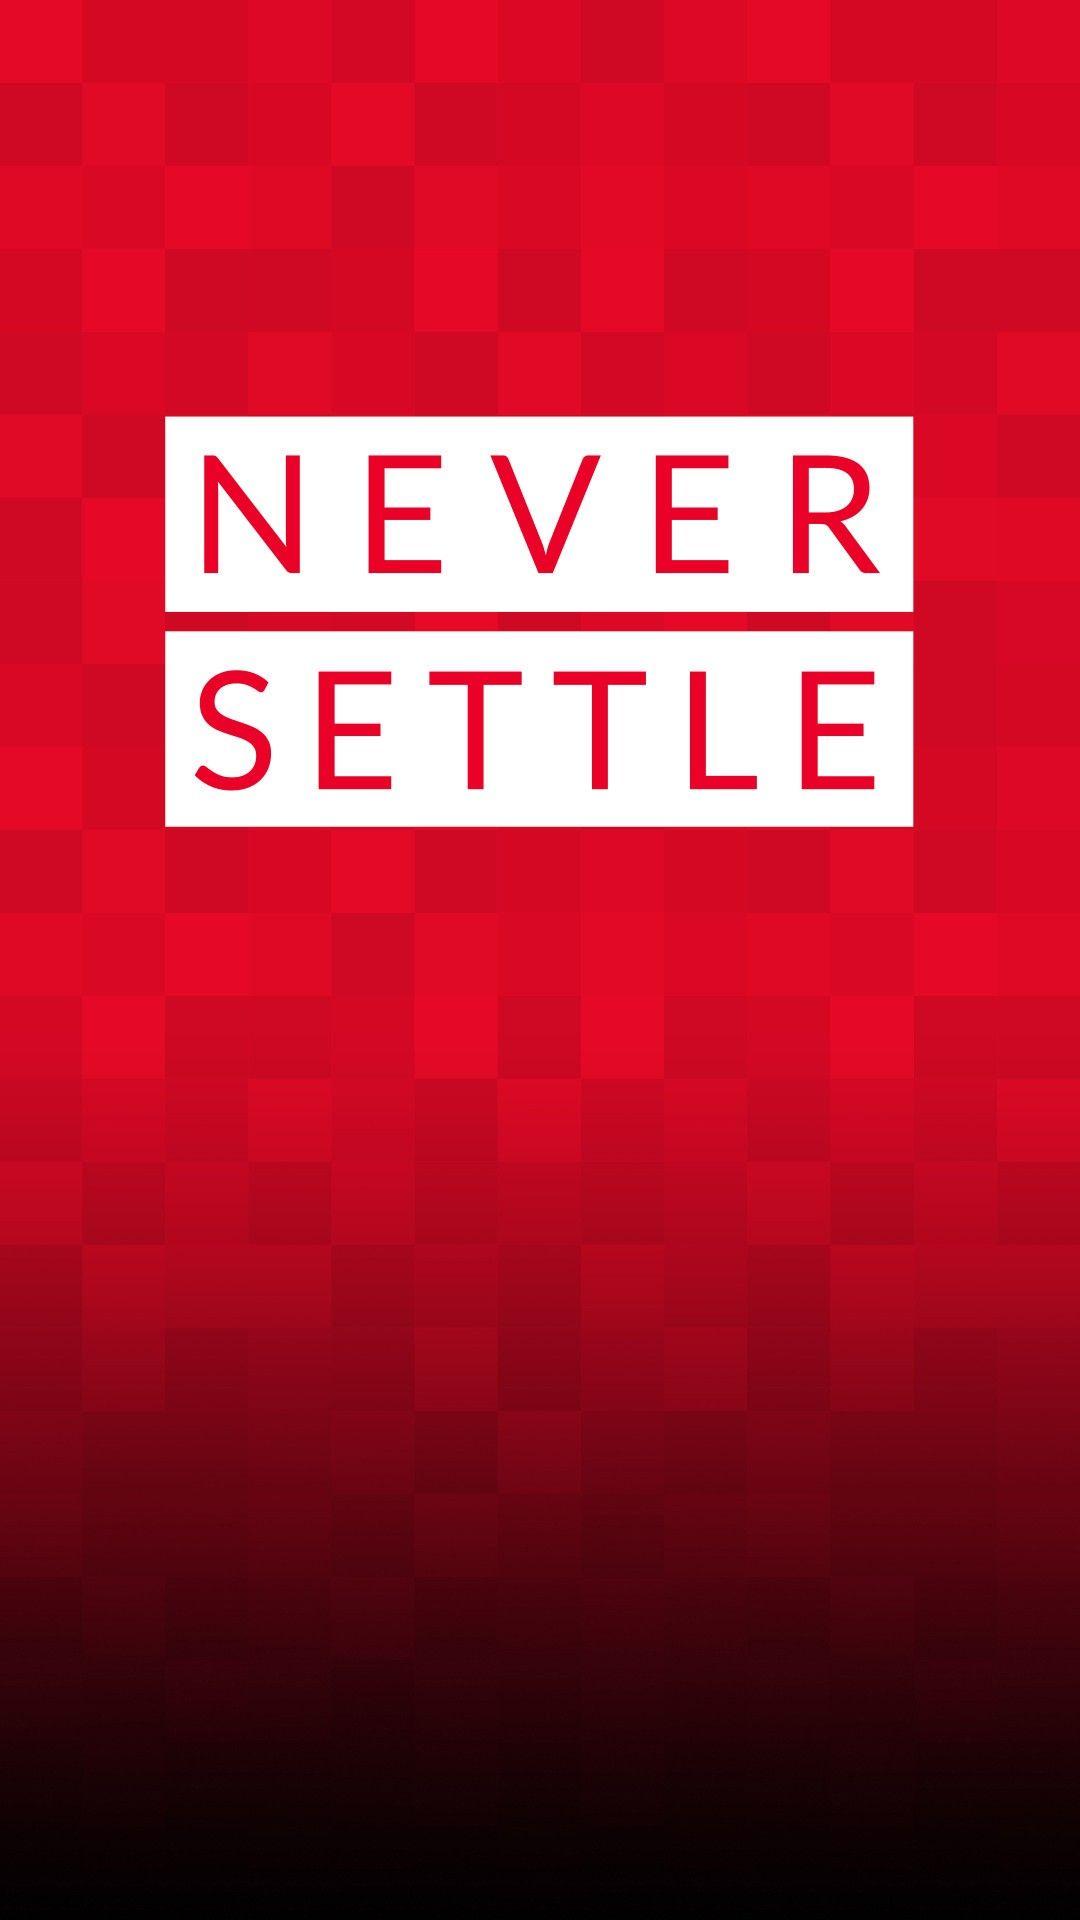 OnePlus Stock Never Settle Red Smartphone Wallpaper and Lockscreen